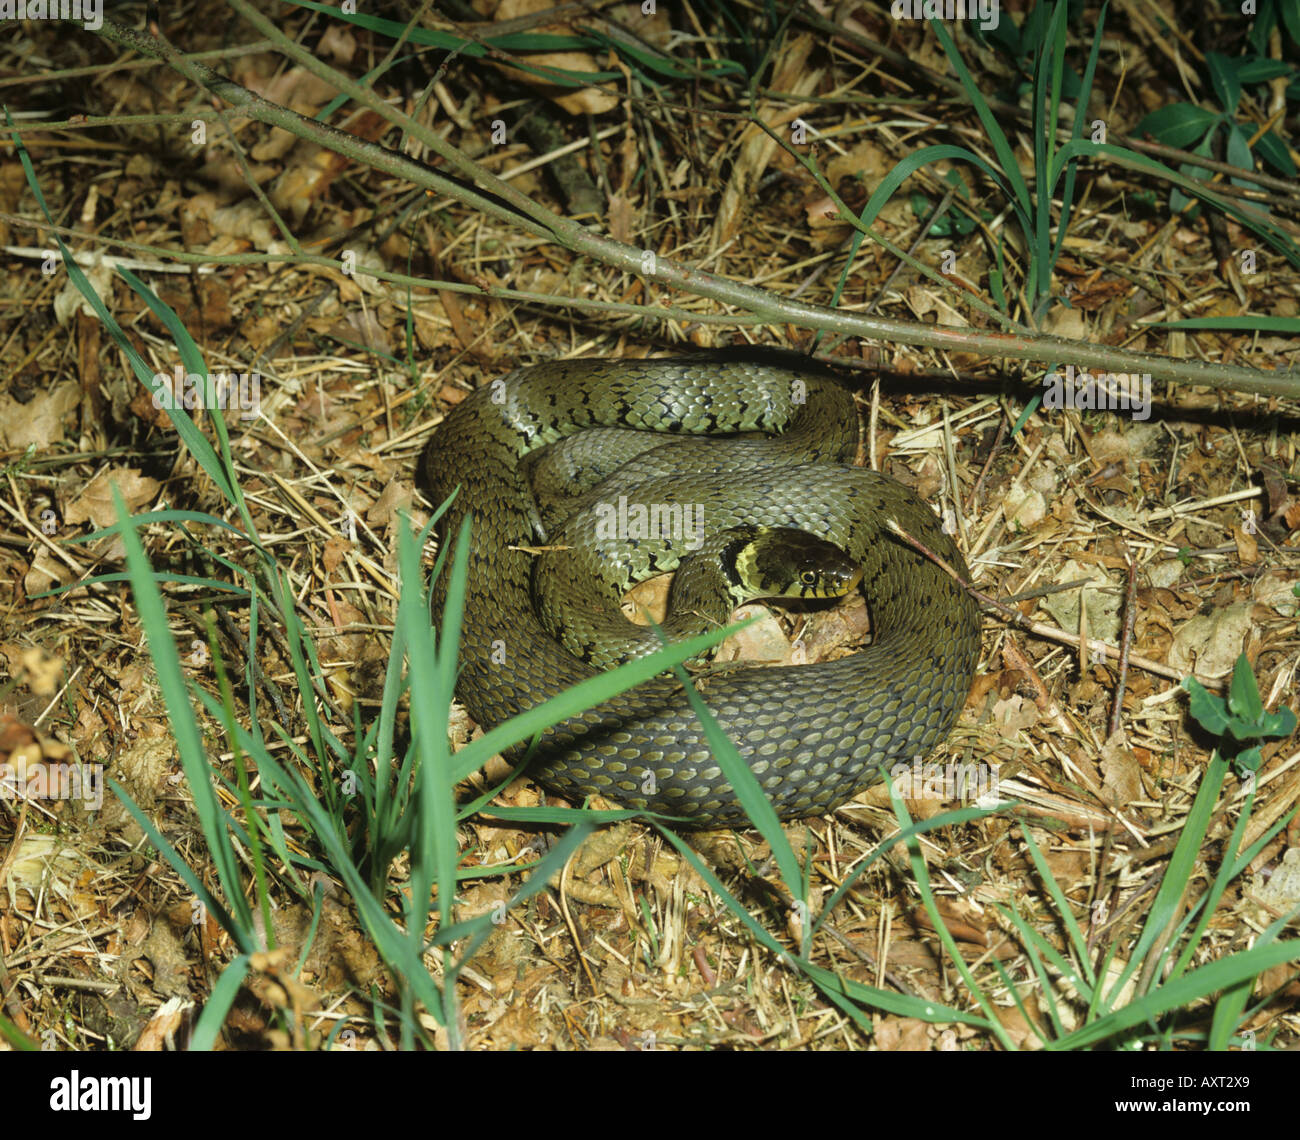 Adult grass snake Natrix natrix natrix curled up in typical habitat Stock Photo